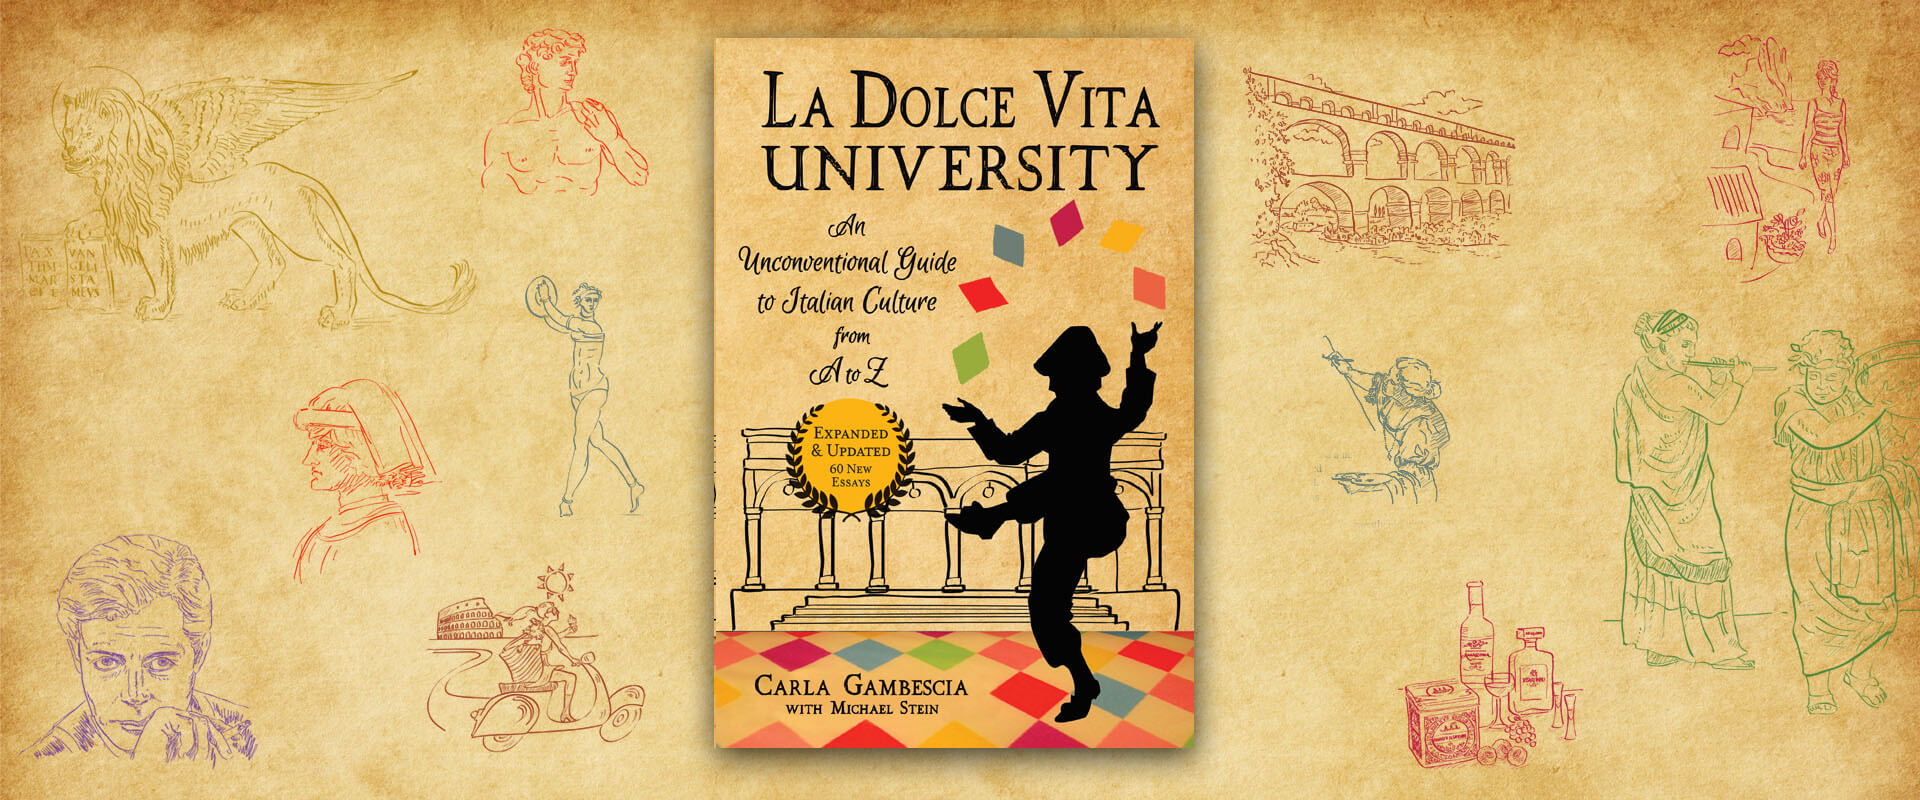 La Dolce Vita University book cover and background